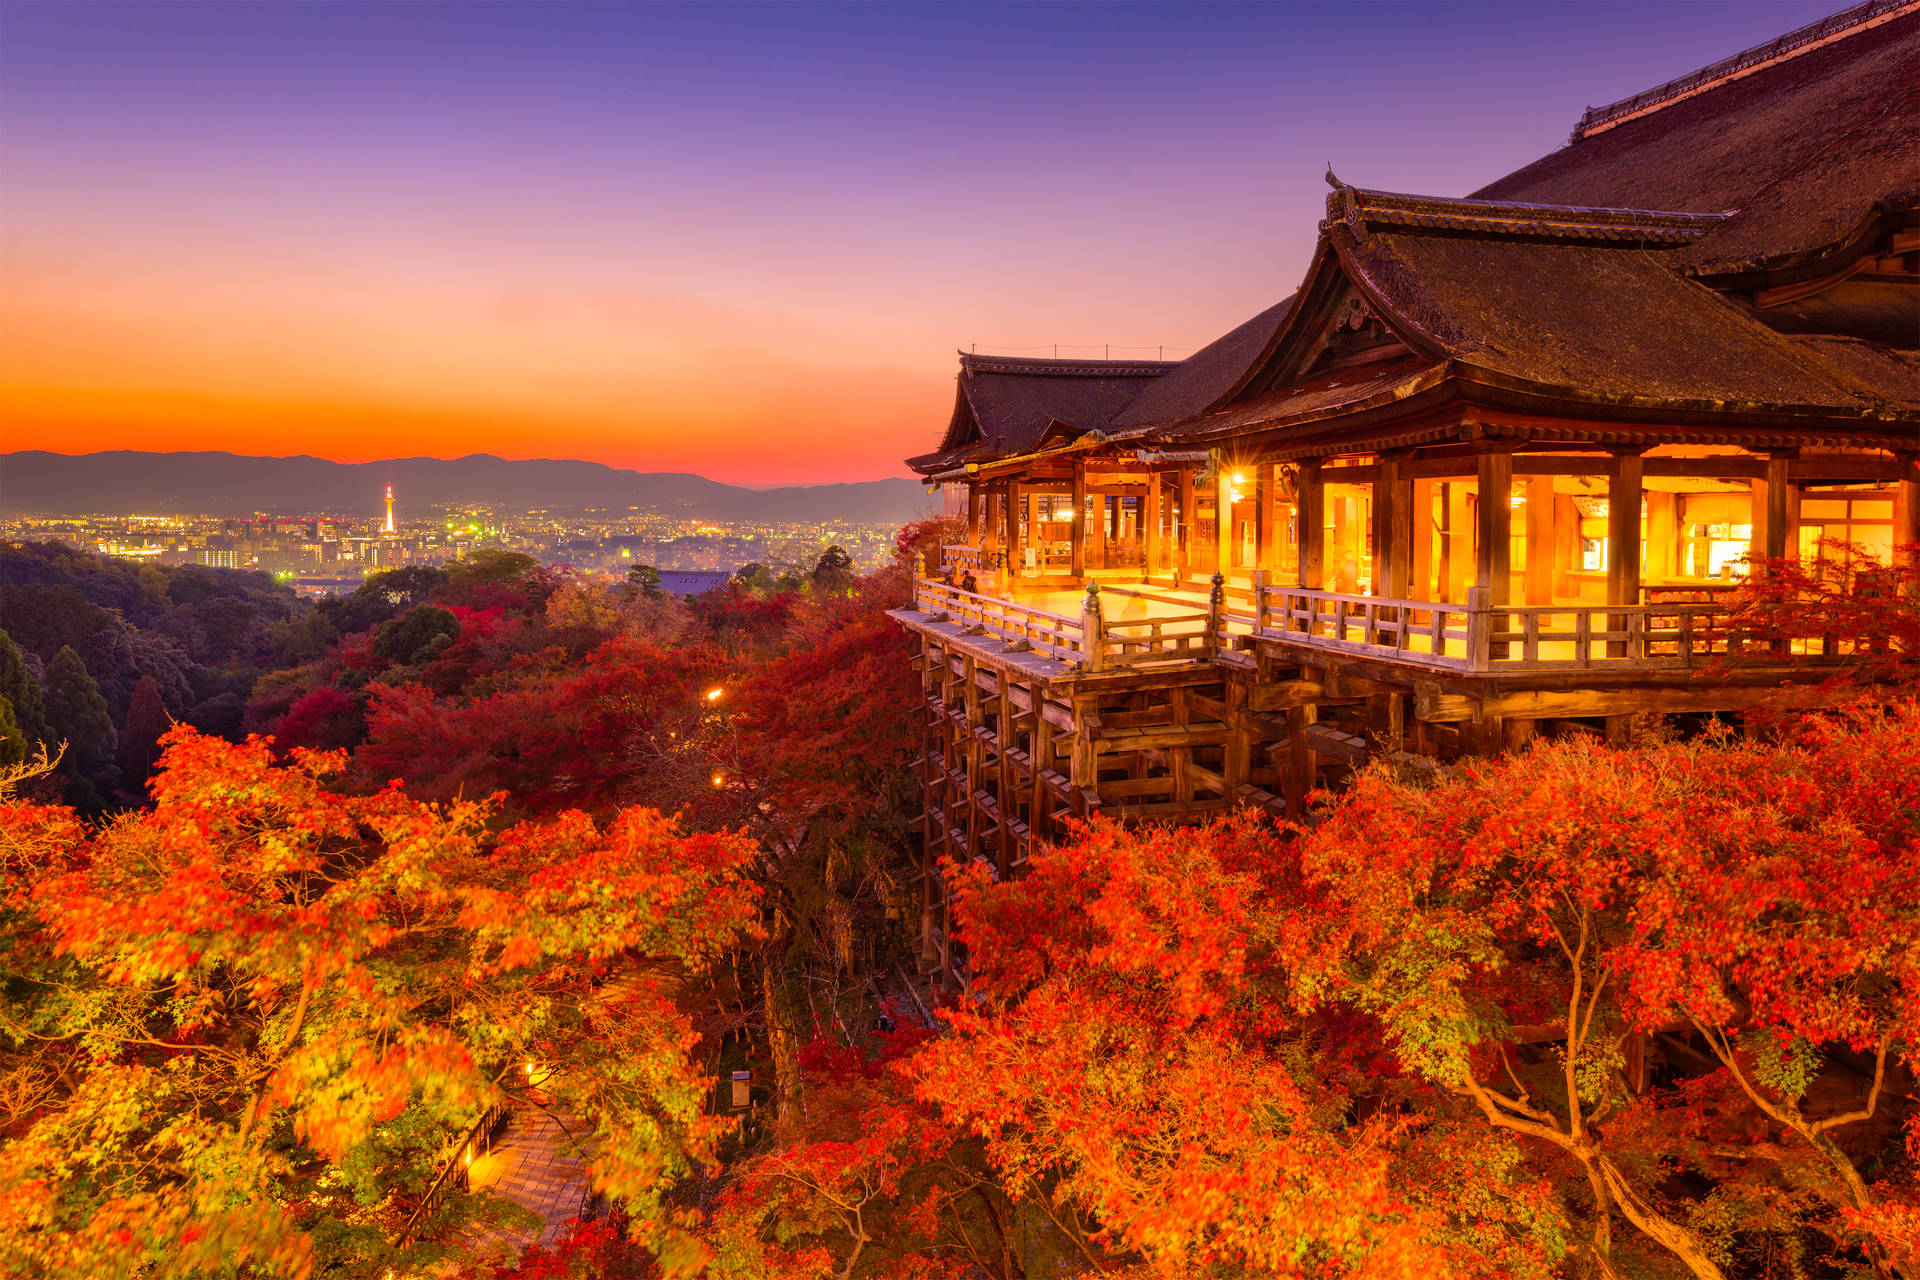 Aesthetic Fall Kiyomizu Dera Temple Picture